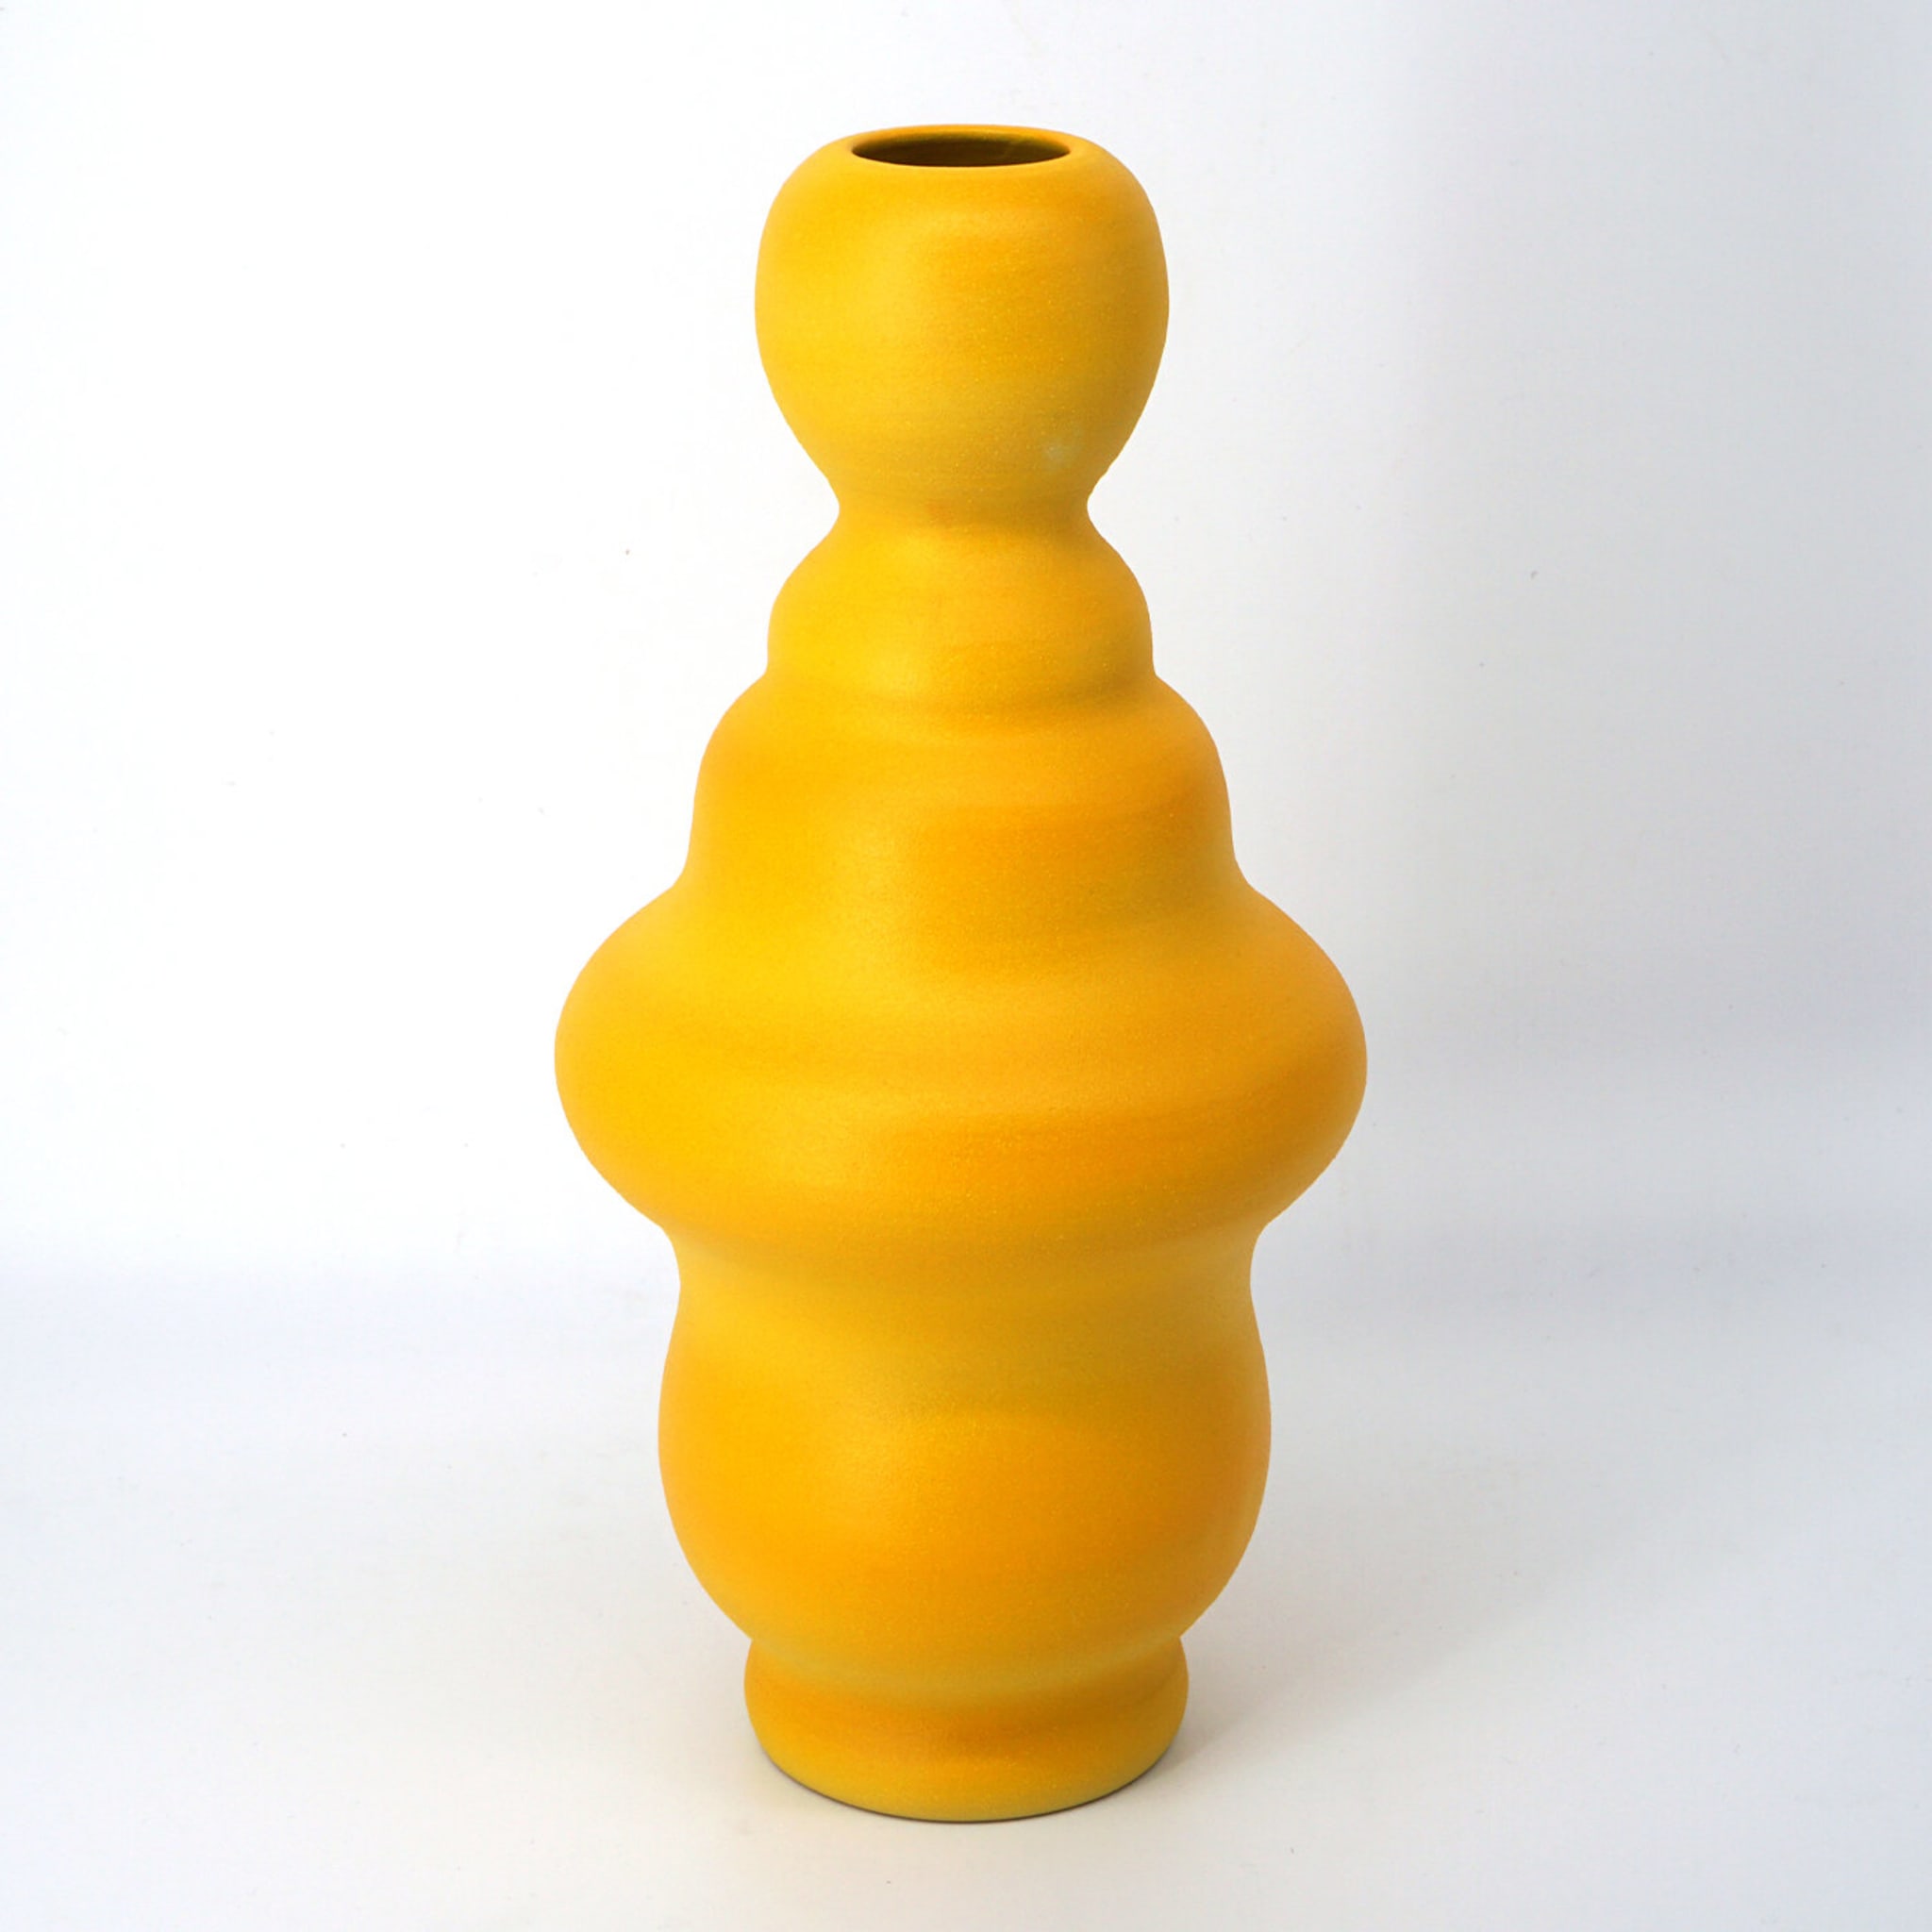 Crisalide Yellow Vase #6 - Alternative view 1